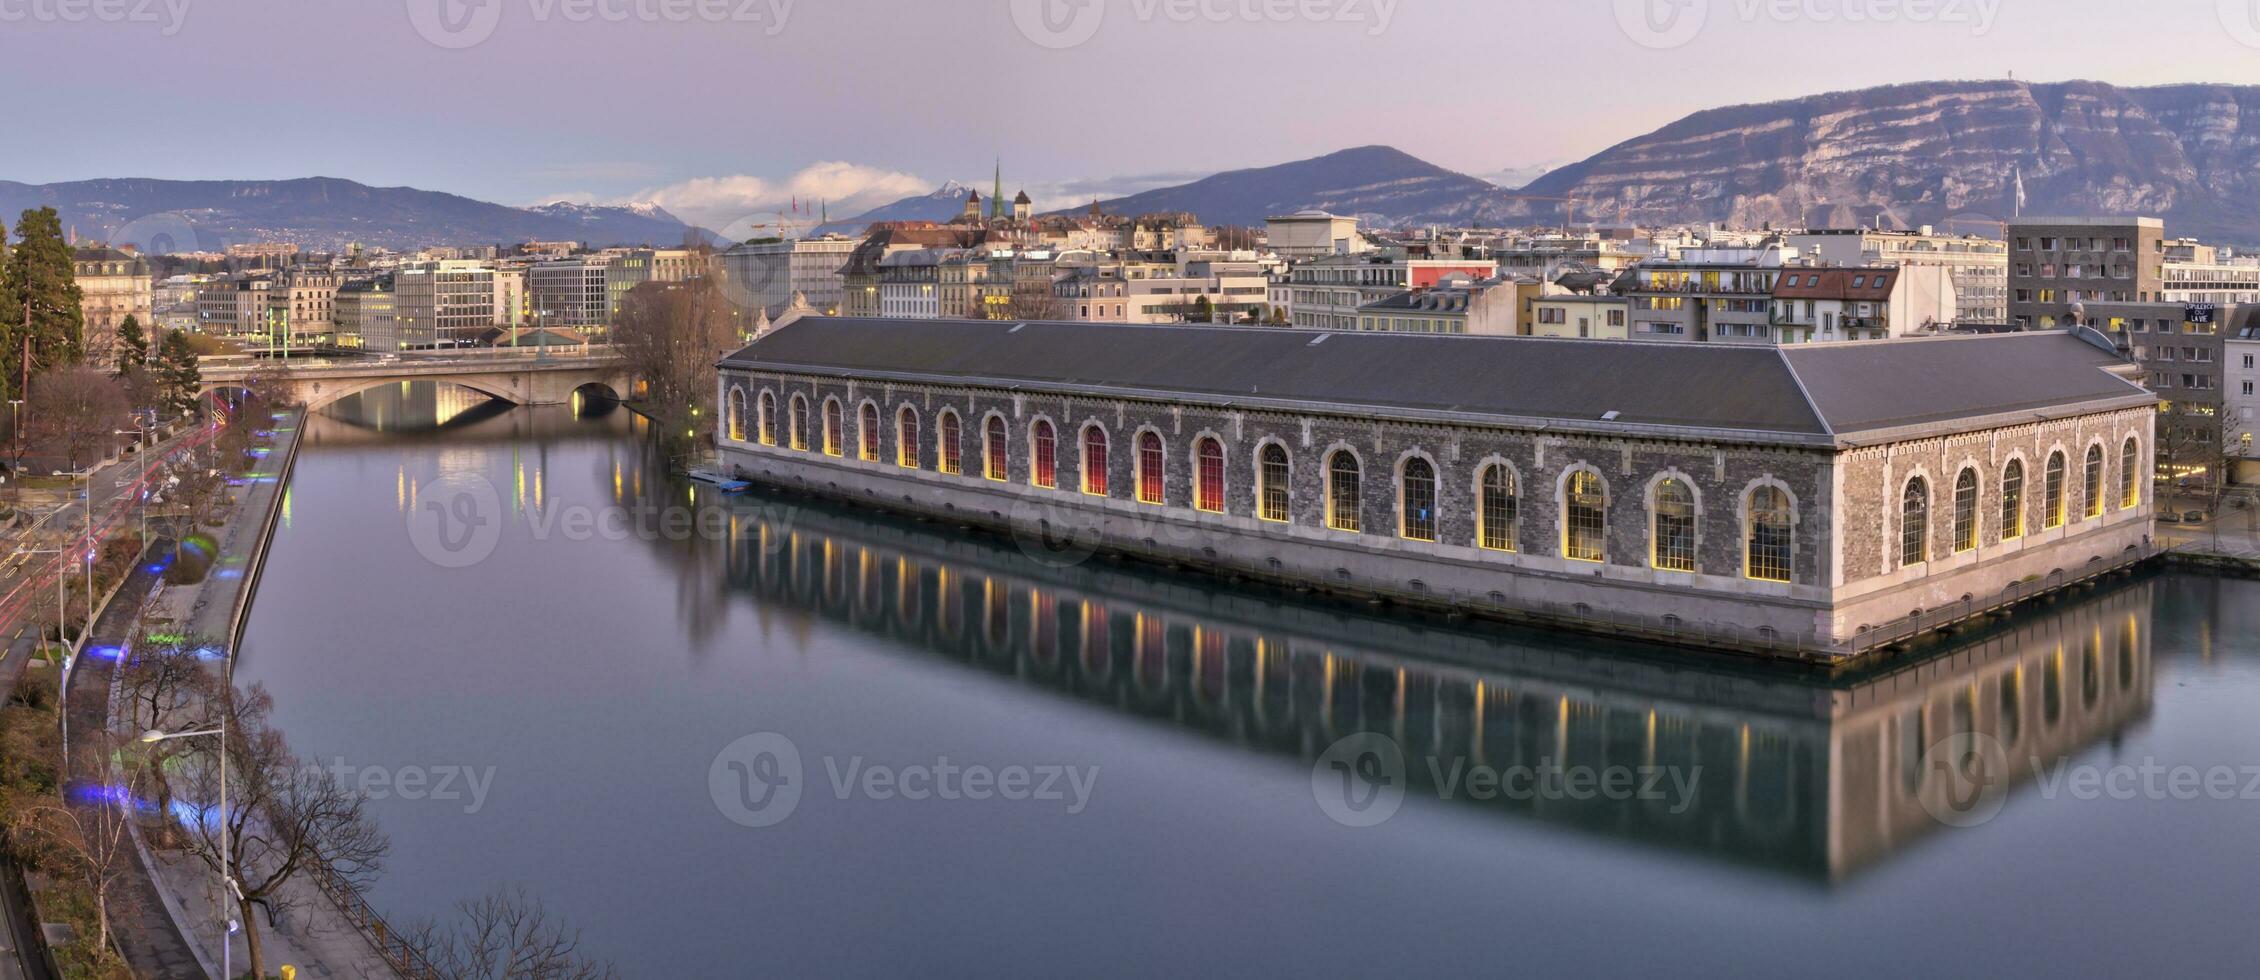 bfm och rhone flod, Genève, schweiz foto